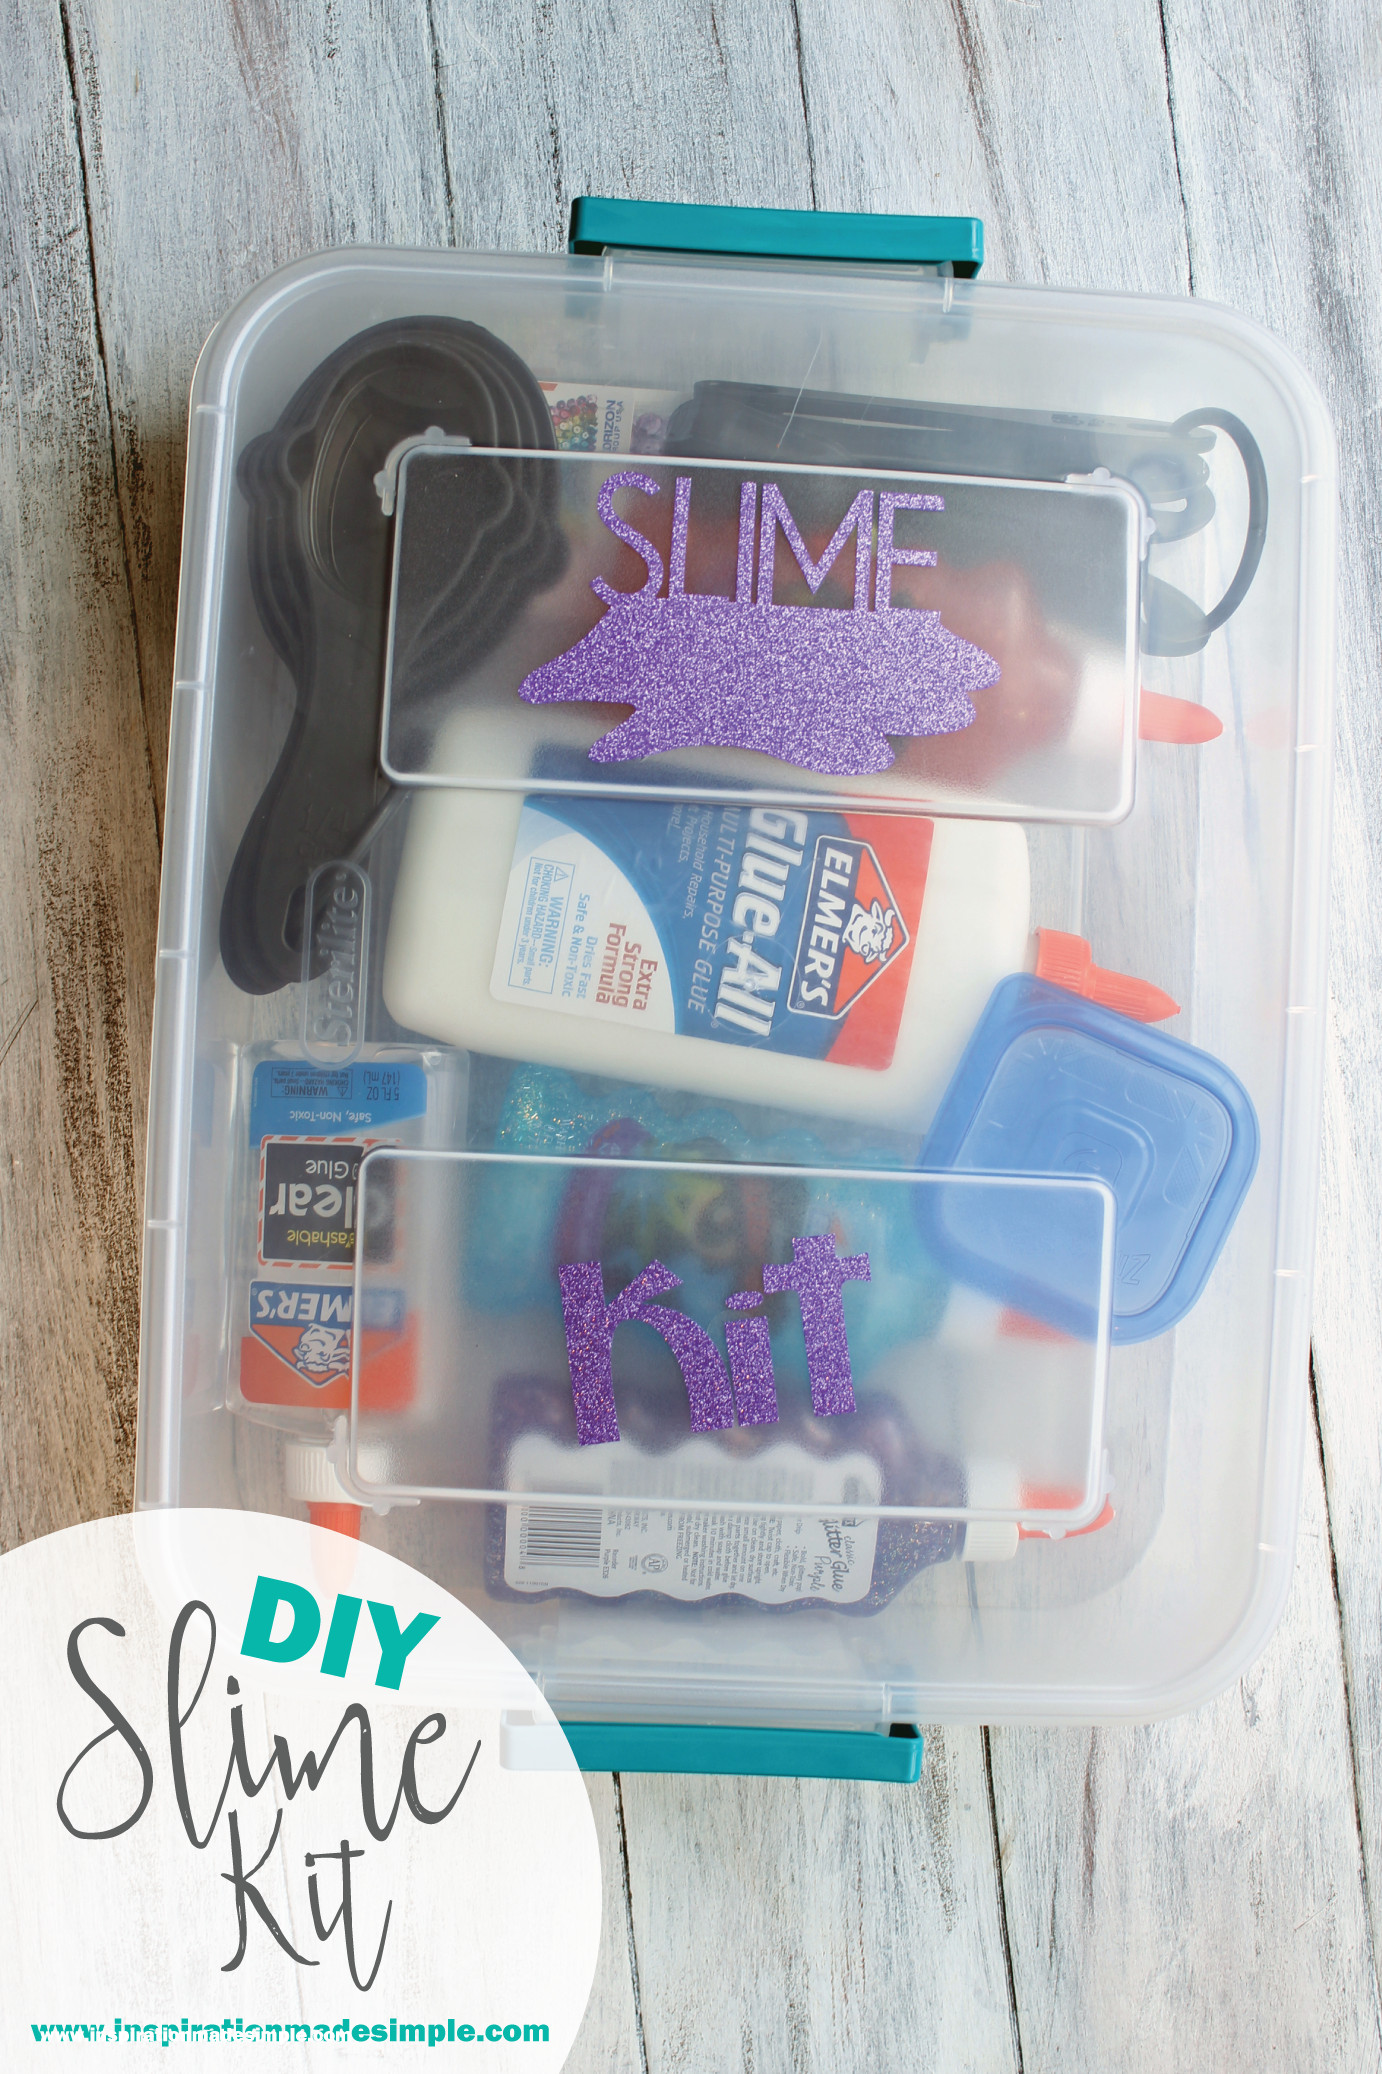 DIY Kits For Kids
 DIY Slime Kit Inspiration Made Simple